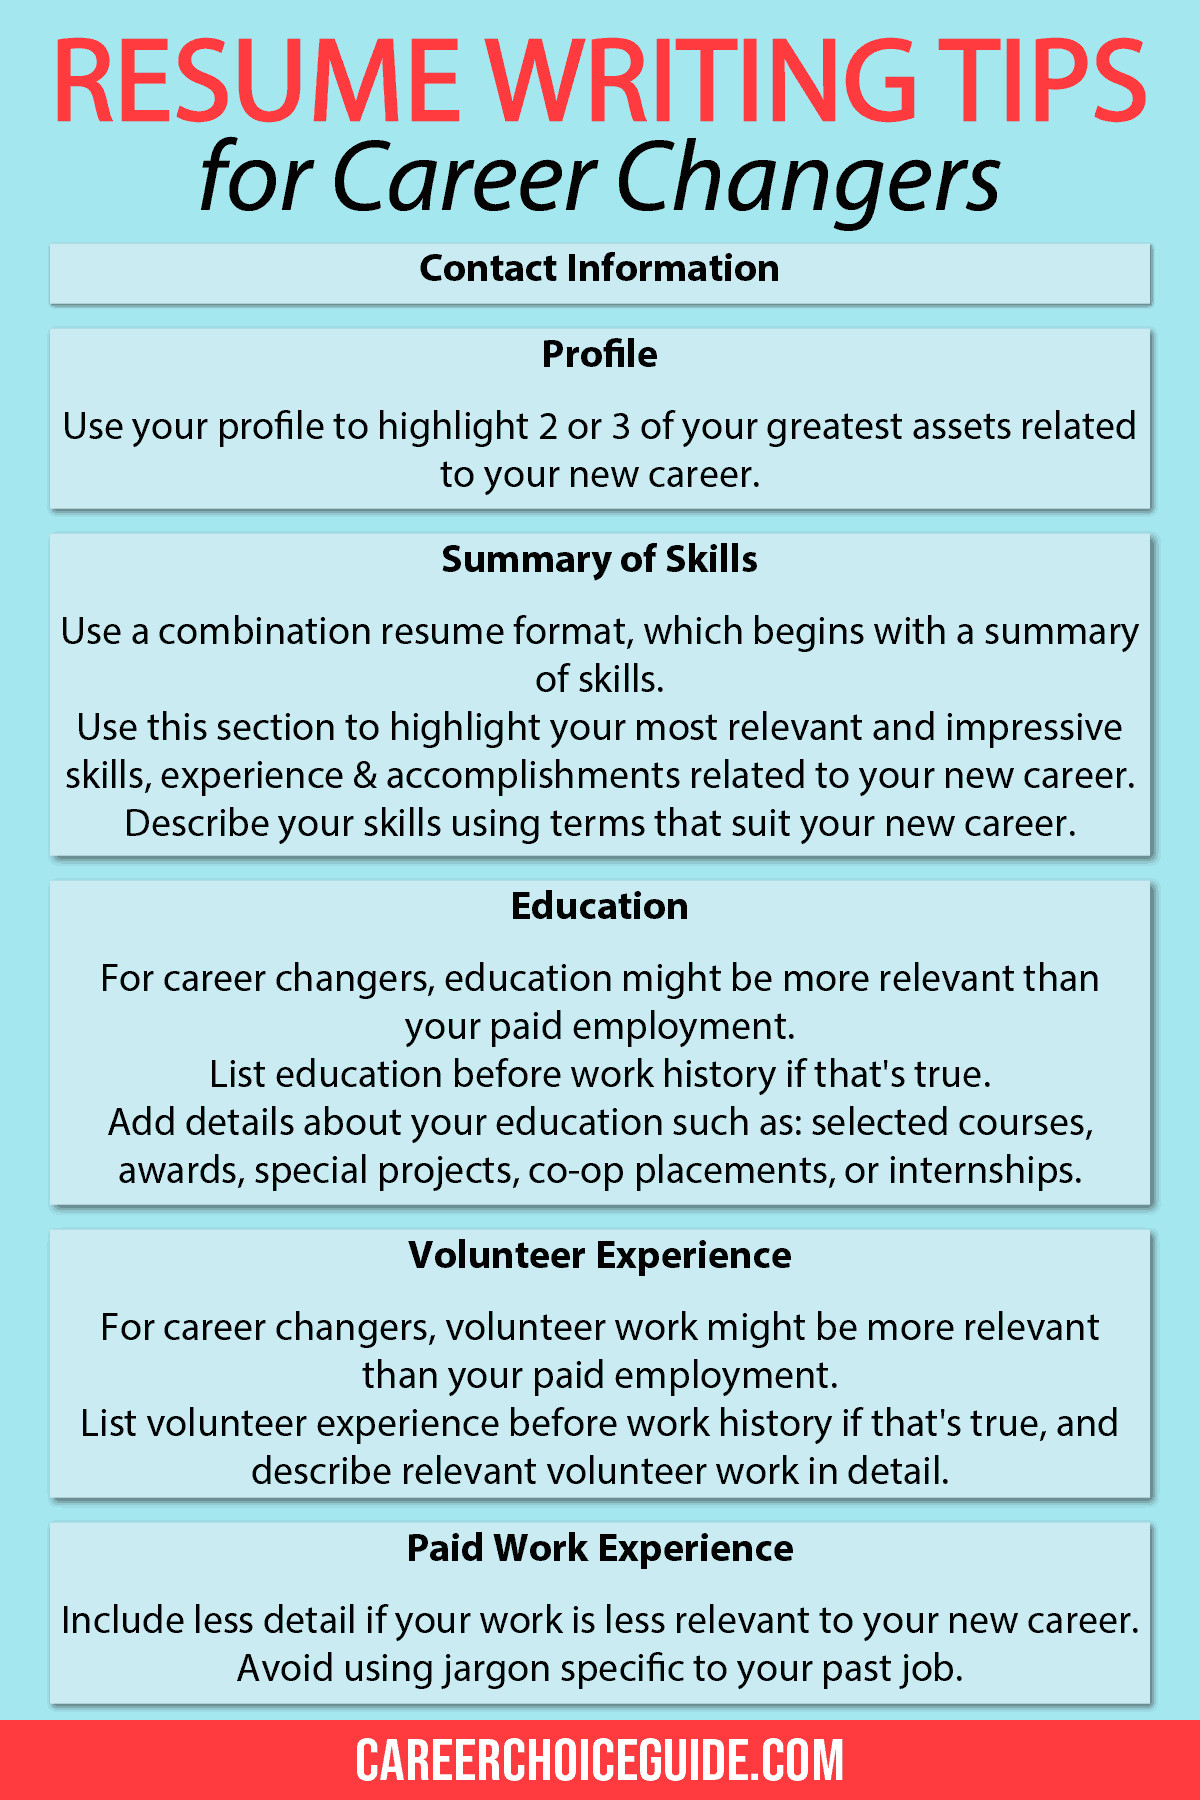 Sample Combination Resume for Career Change Career Change Resume Sample and Tips